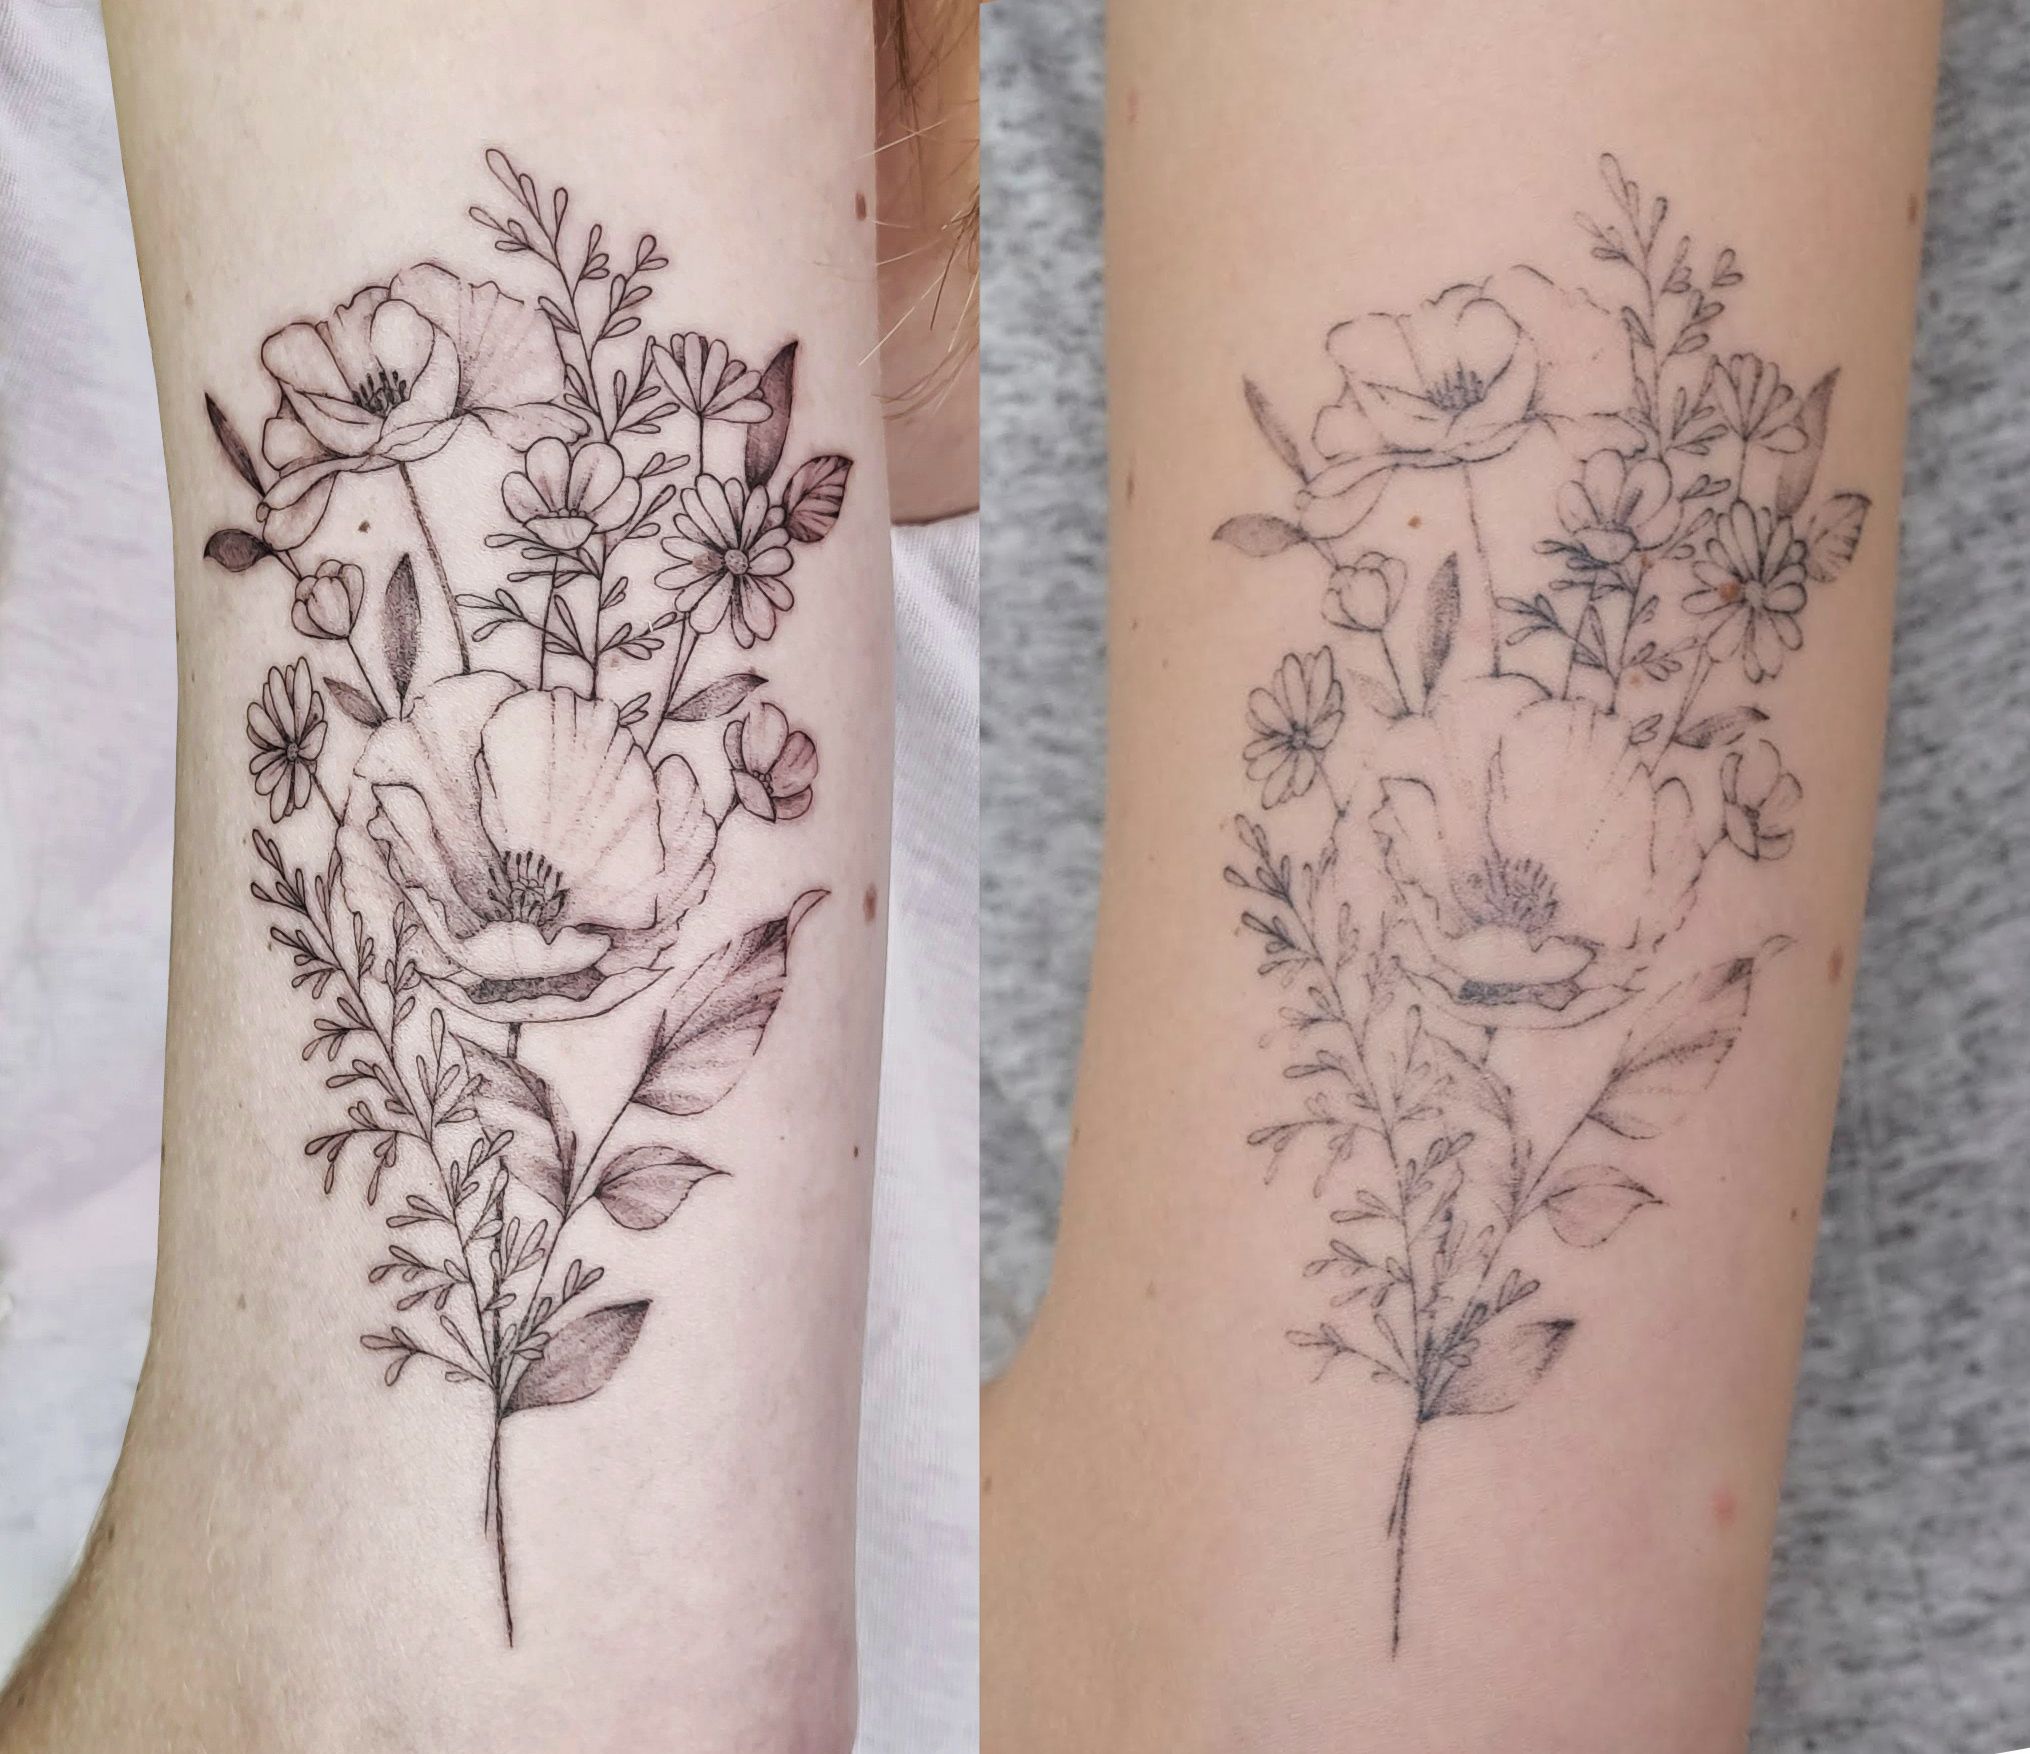 Retoucher tatouage pour recouvrir ancien tatouage qui a fusé - Marta Madrigal Tattoos